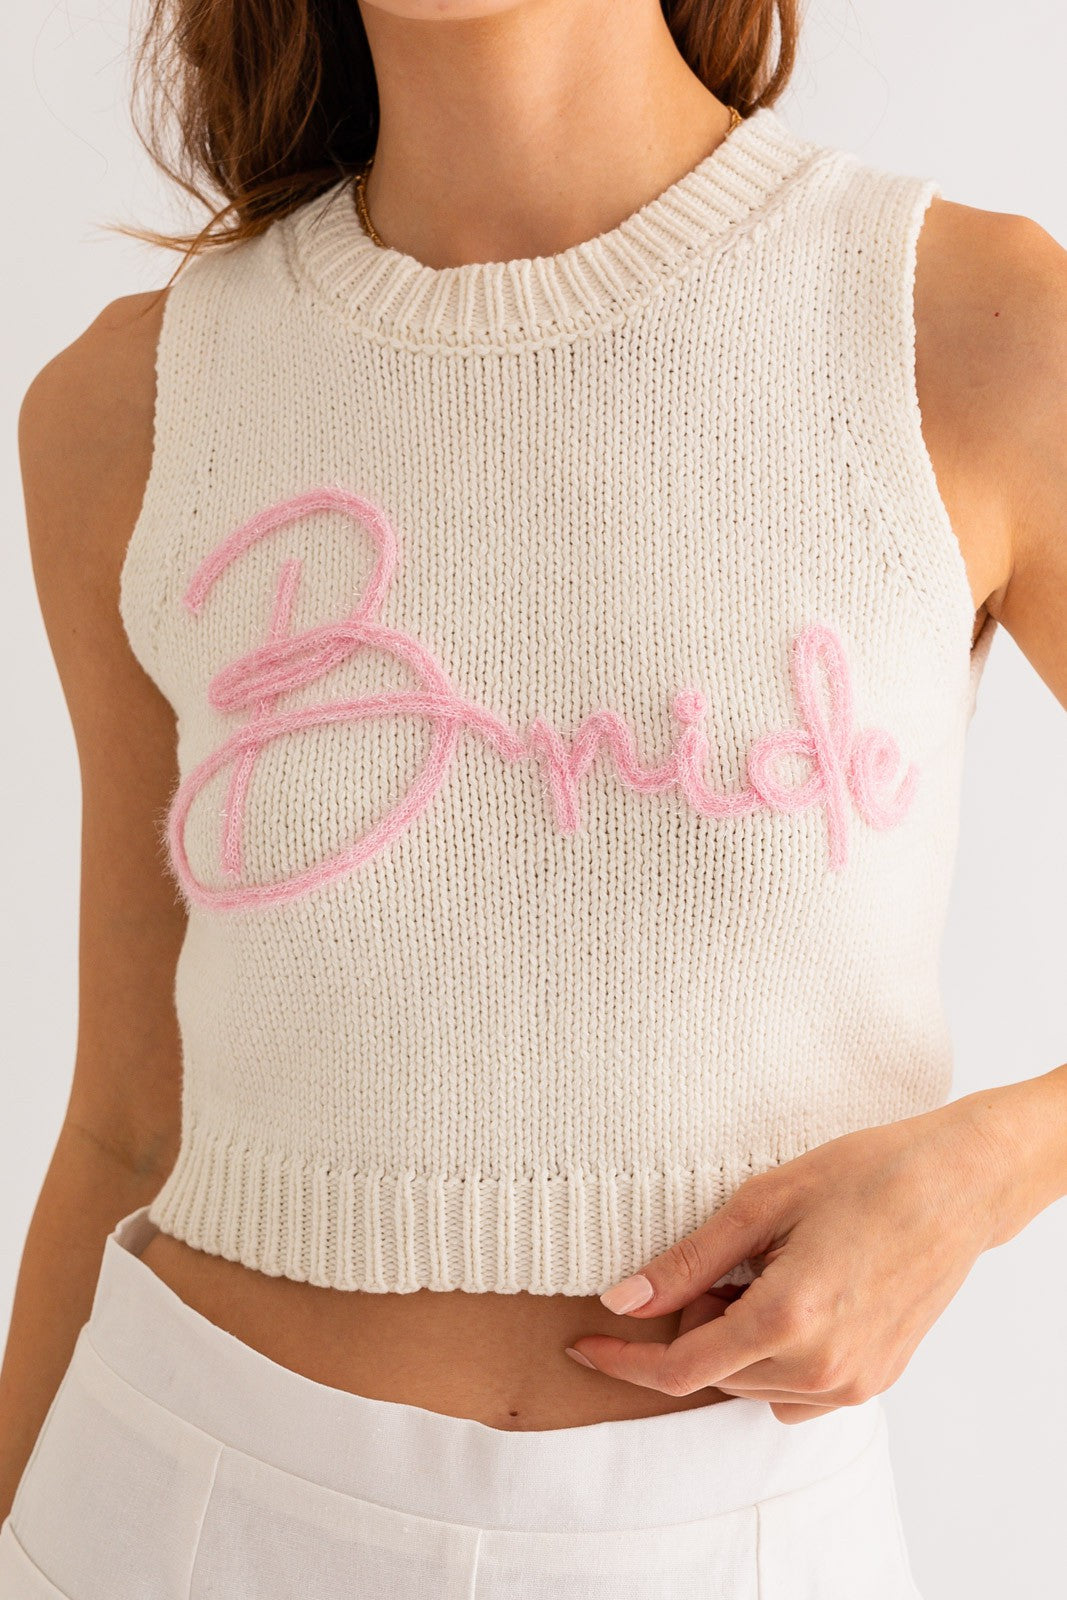 "Bride" Sleeveless Knit Tank, White